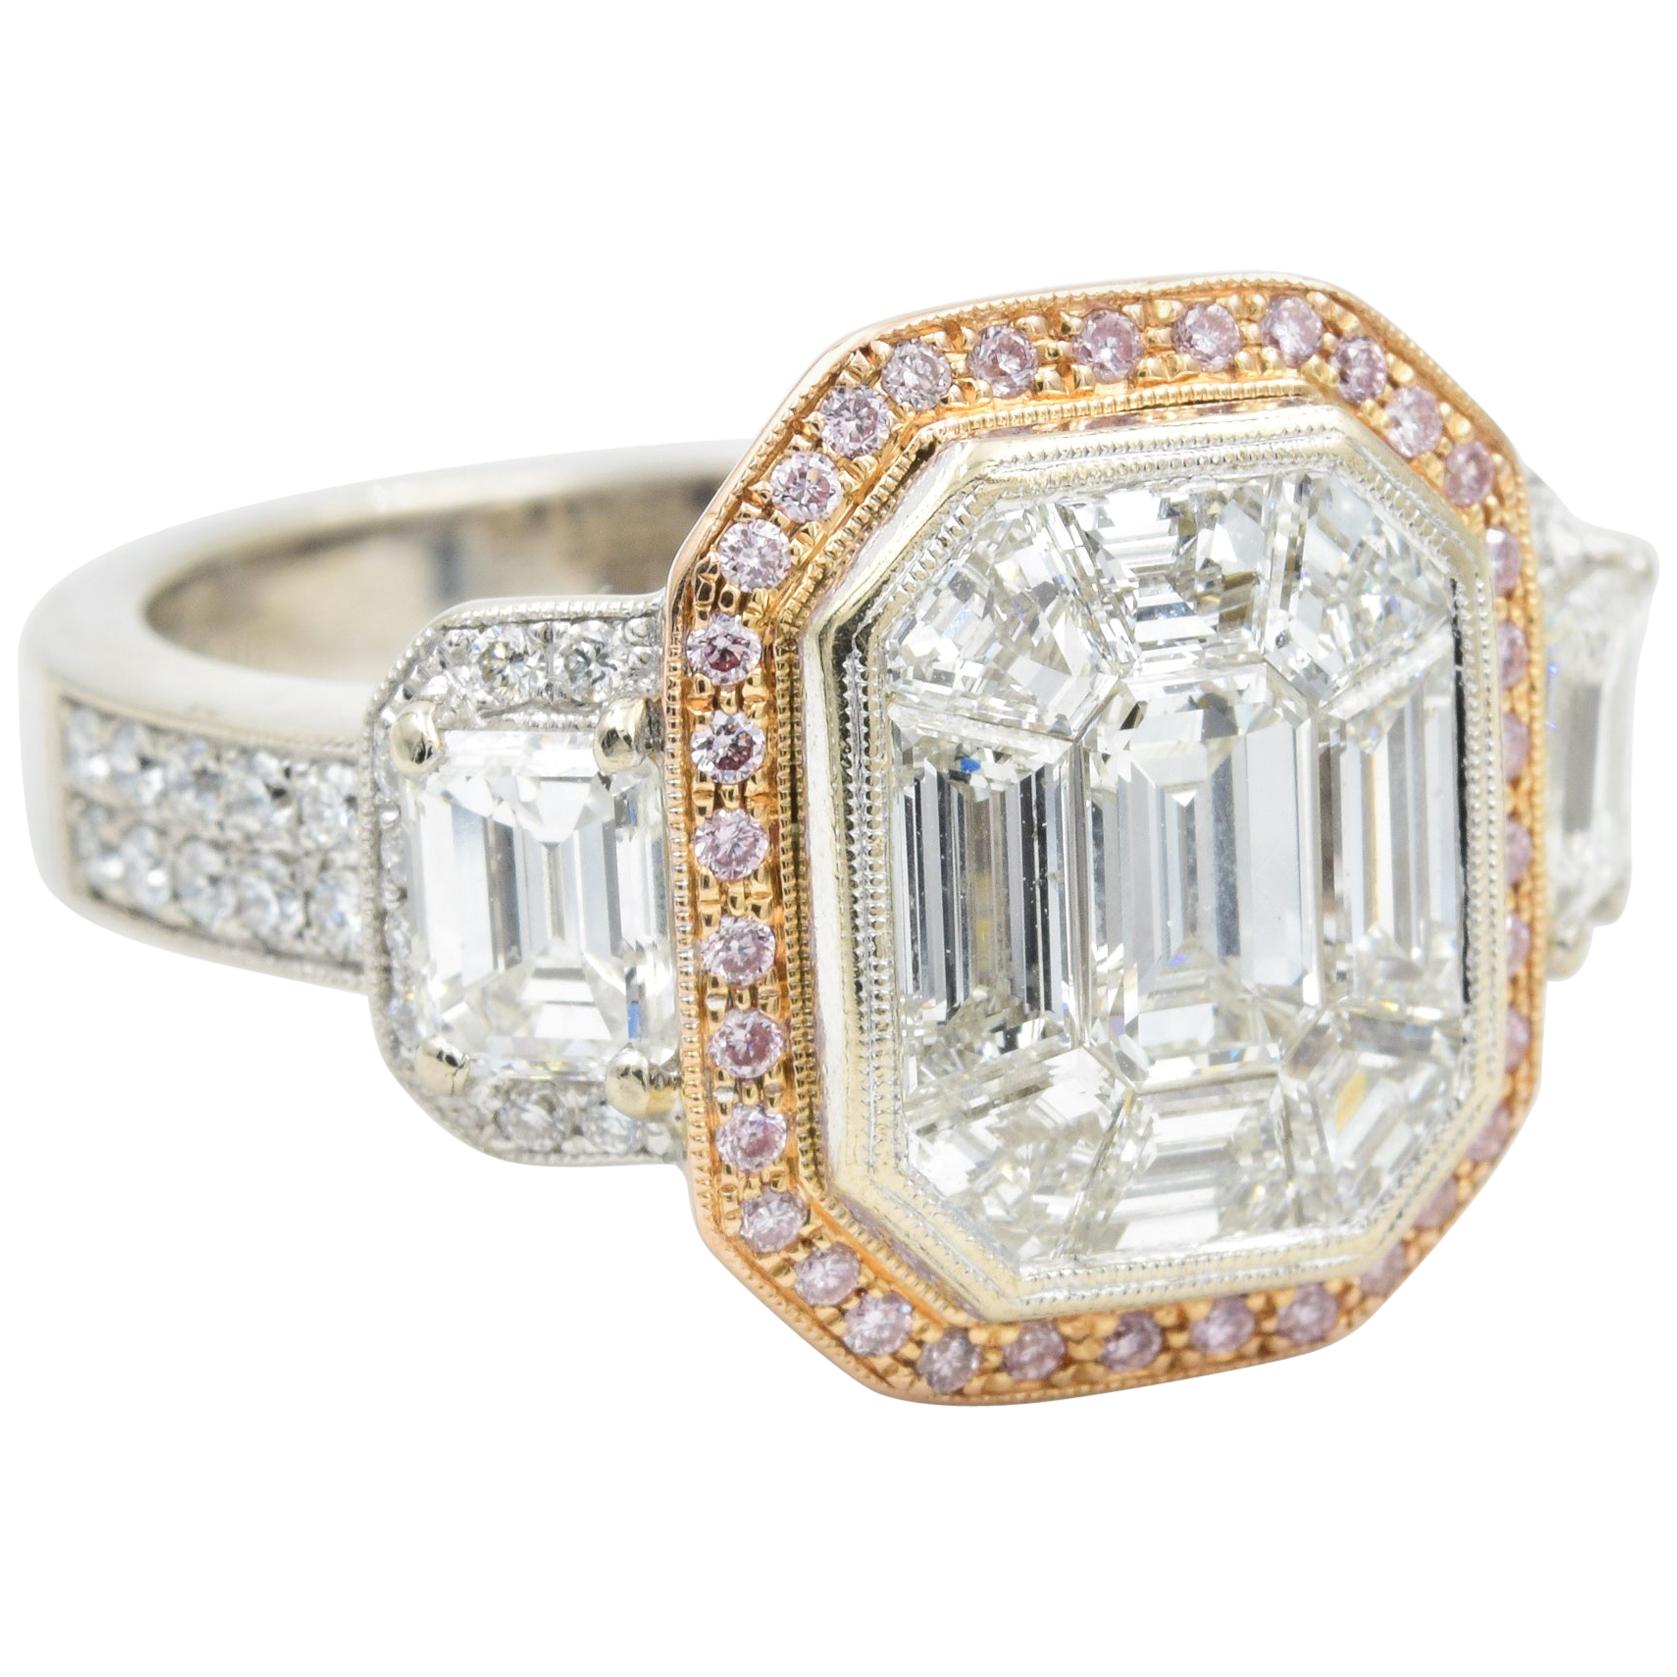 Simon G LP2061 3.56 Ct. Mosaic Diamond Ring Pink in 18k White and Rose Gold